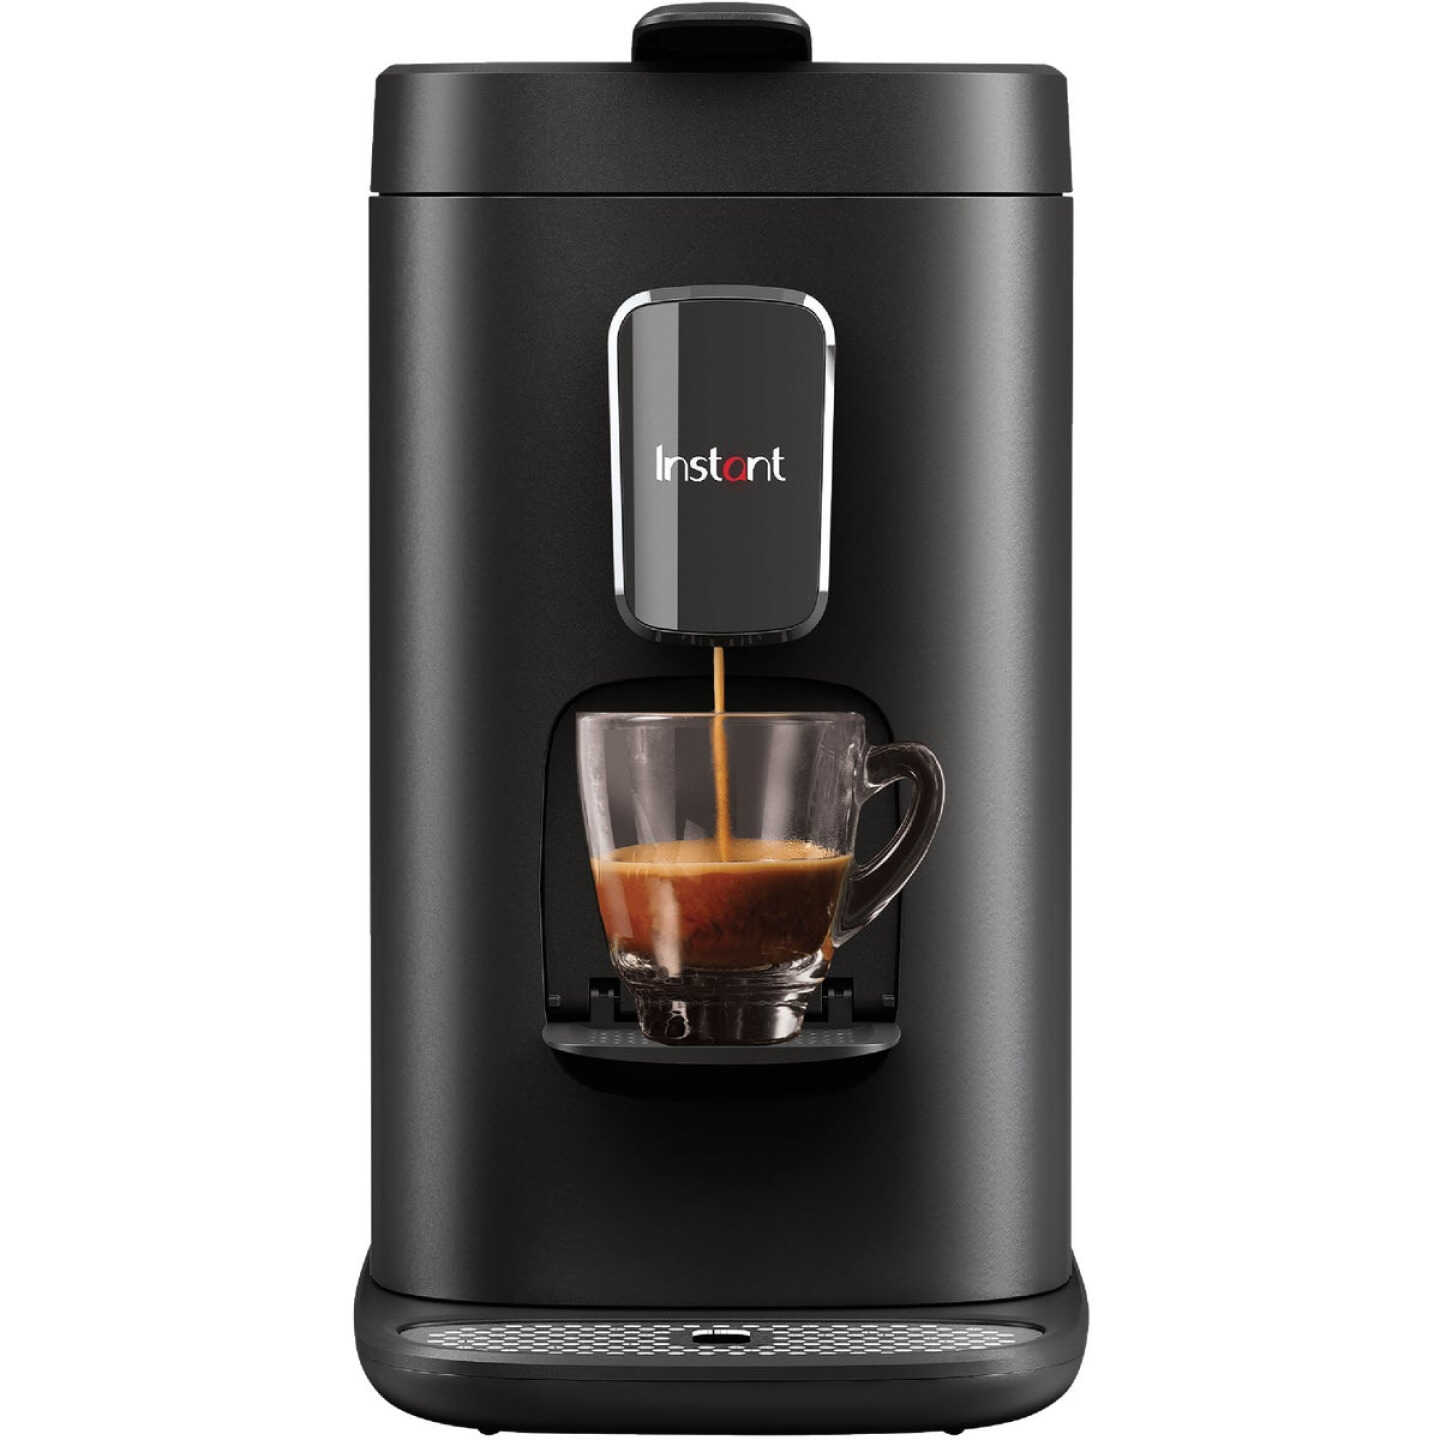  Optimal Basics Mini Portable Espresso Coffee Maker USB